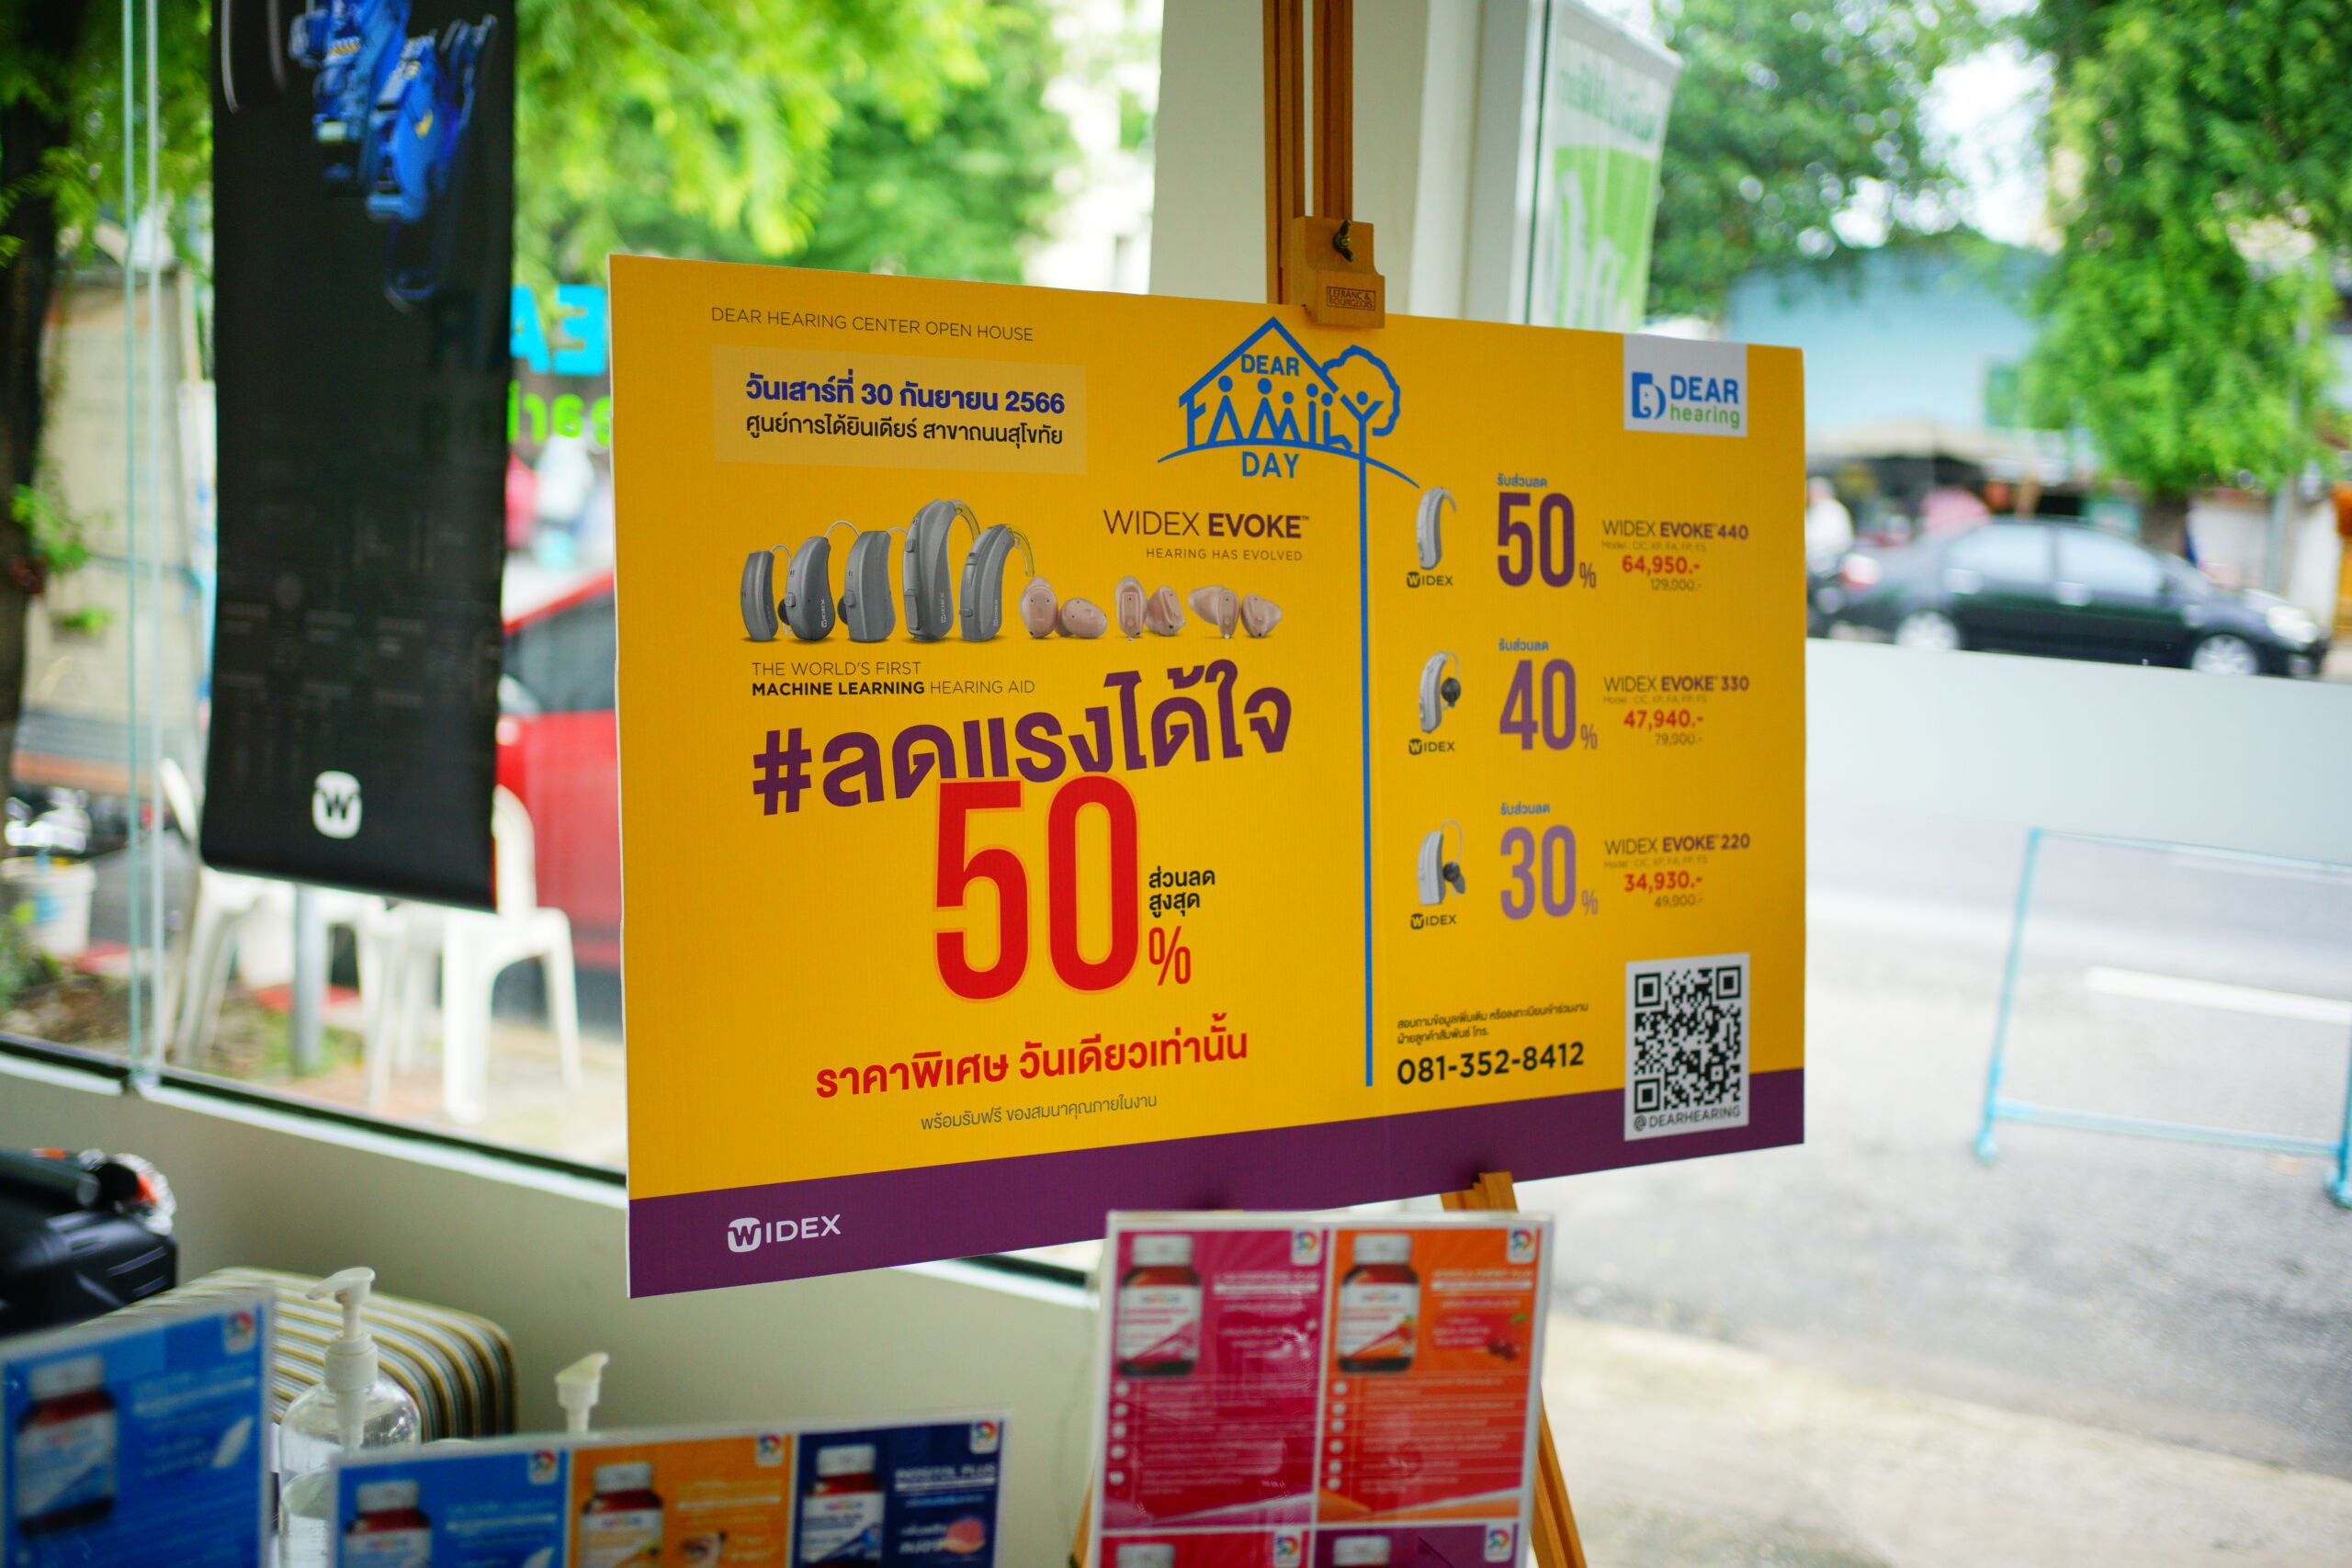 dear-hearing-center-sukhothai-road-branch-organizes-dear-family-day-event